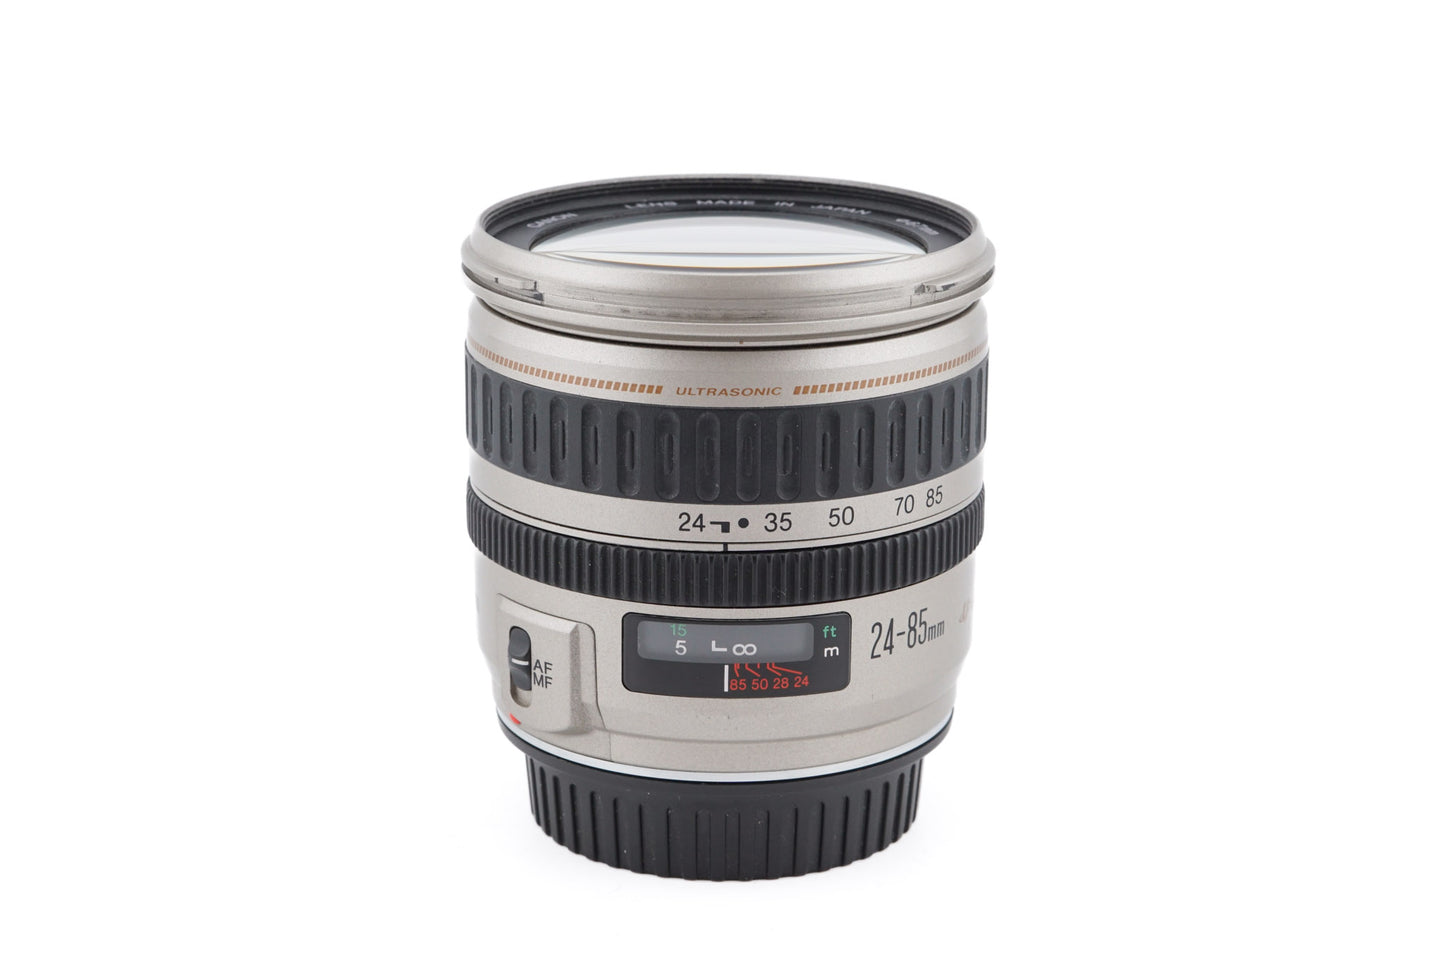 Canon 24-85mm f3.5-4.5 USM - Lens